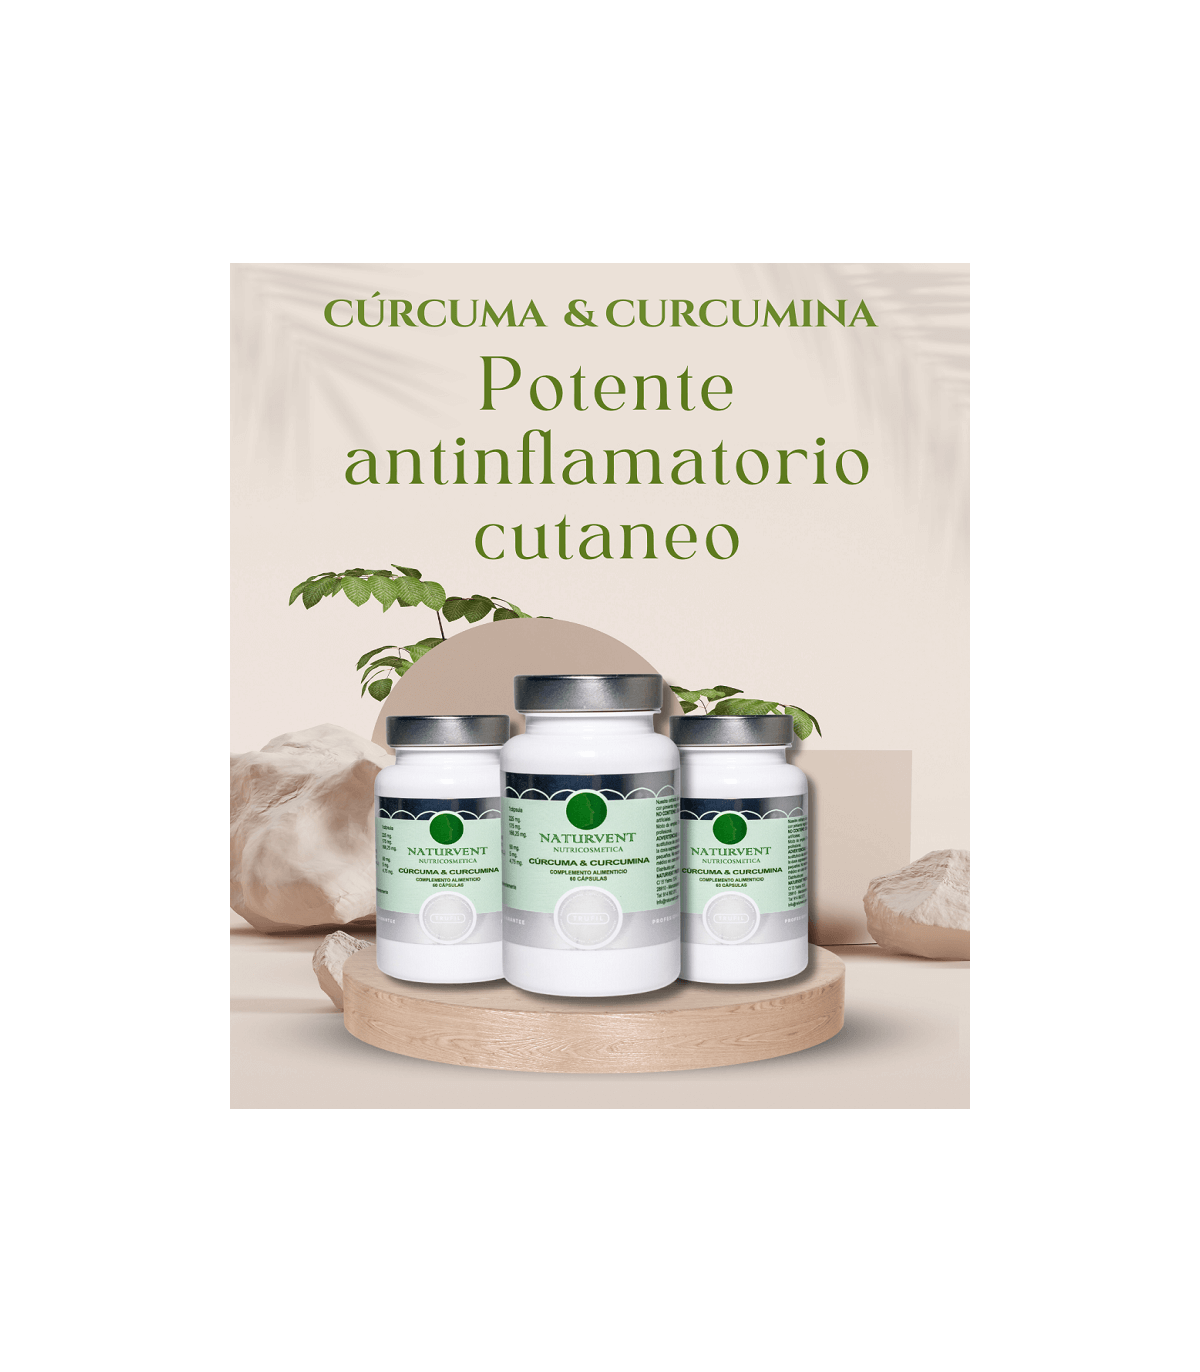 CÚRCUMA & CURCUMINA Potente antinflamatorio